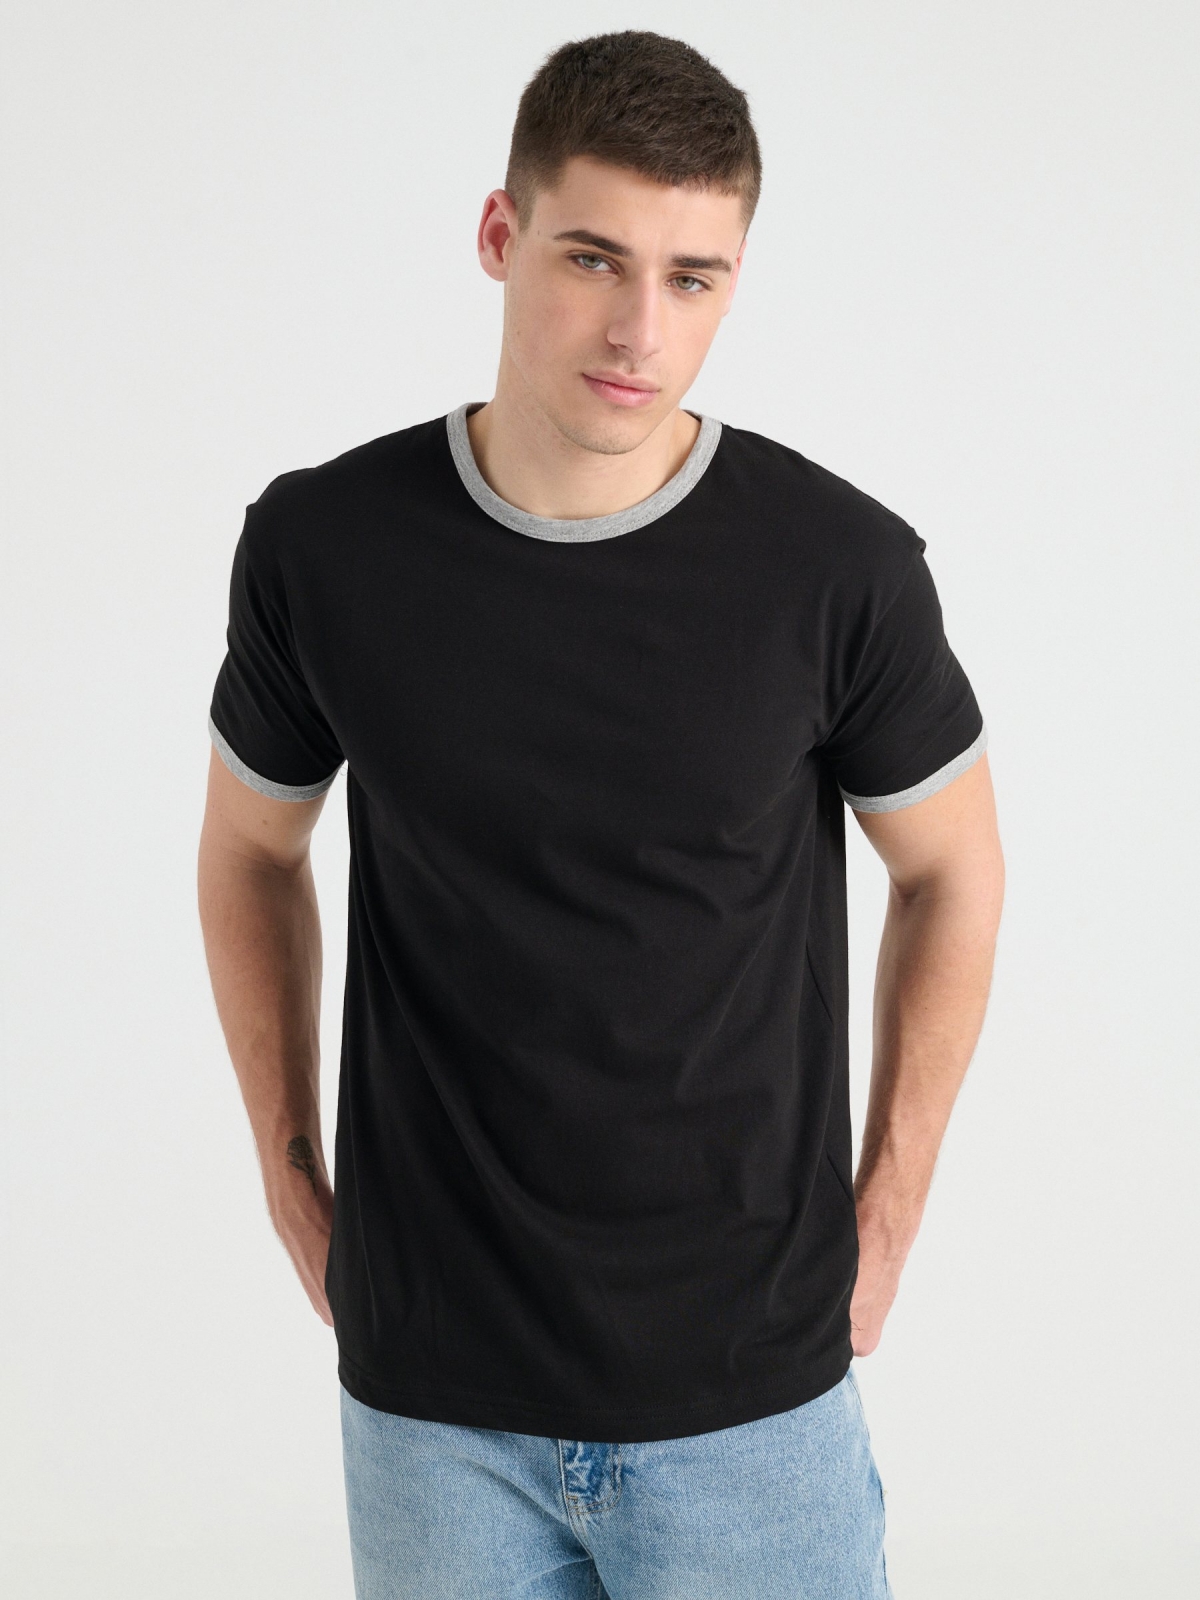 Camiseta básica contrastes negro vista media frontal